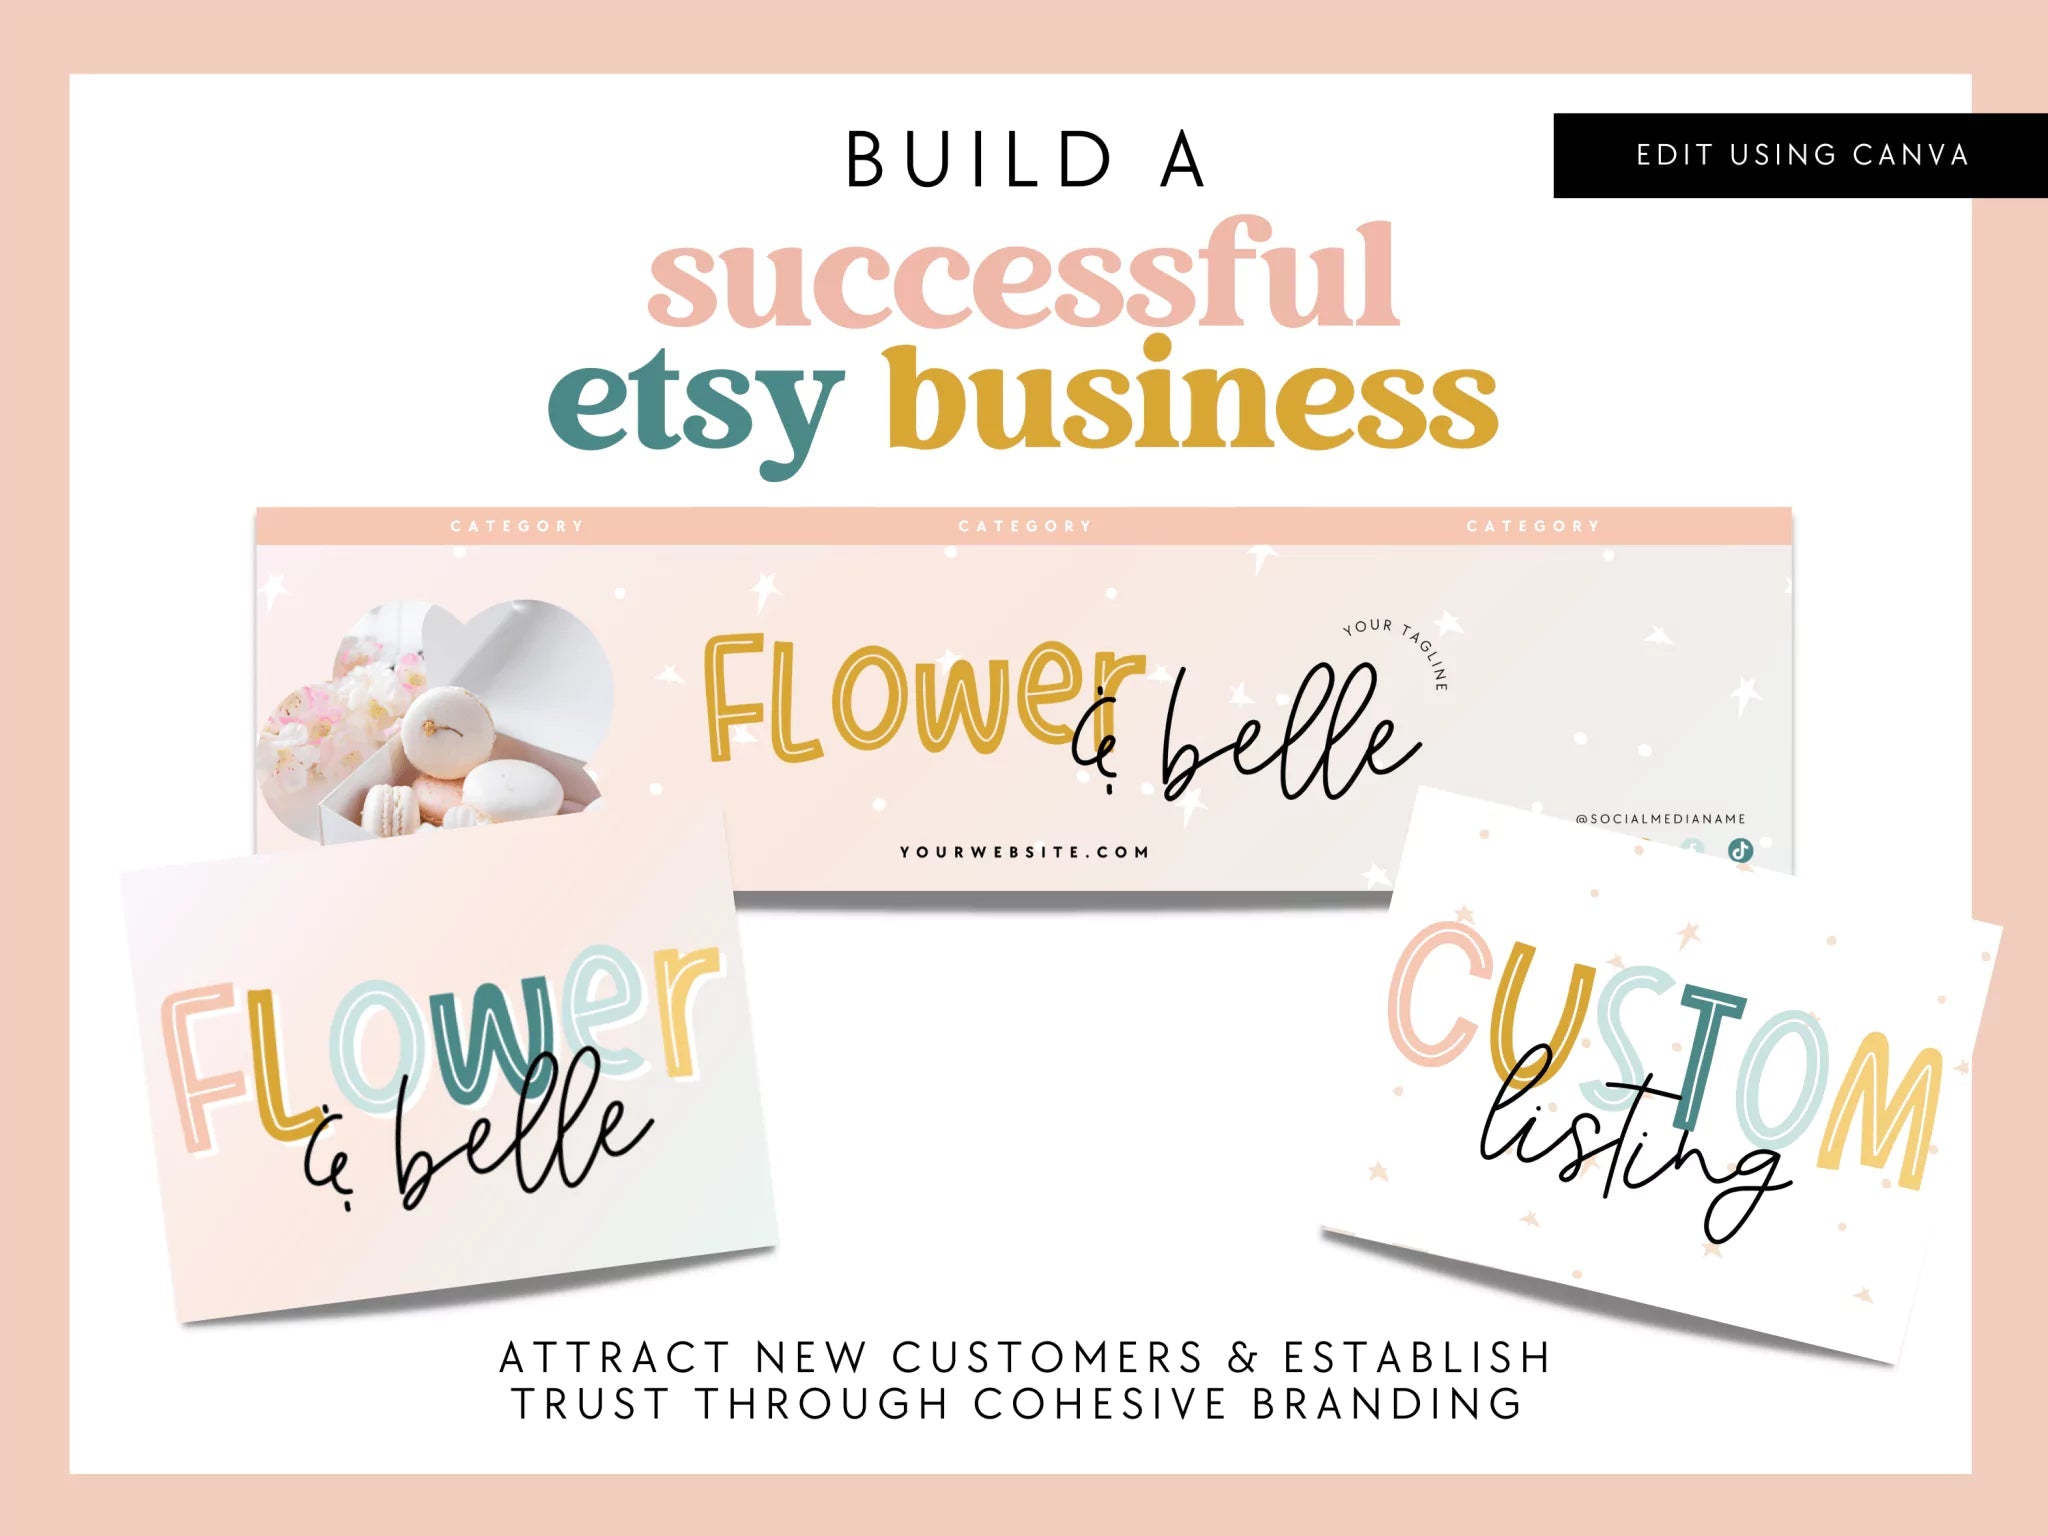 Rainbow Etsy Shop Kit Canva Template | Etsy Banner, Listing Photos, Icon | Bea - Trendy Fox Studio